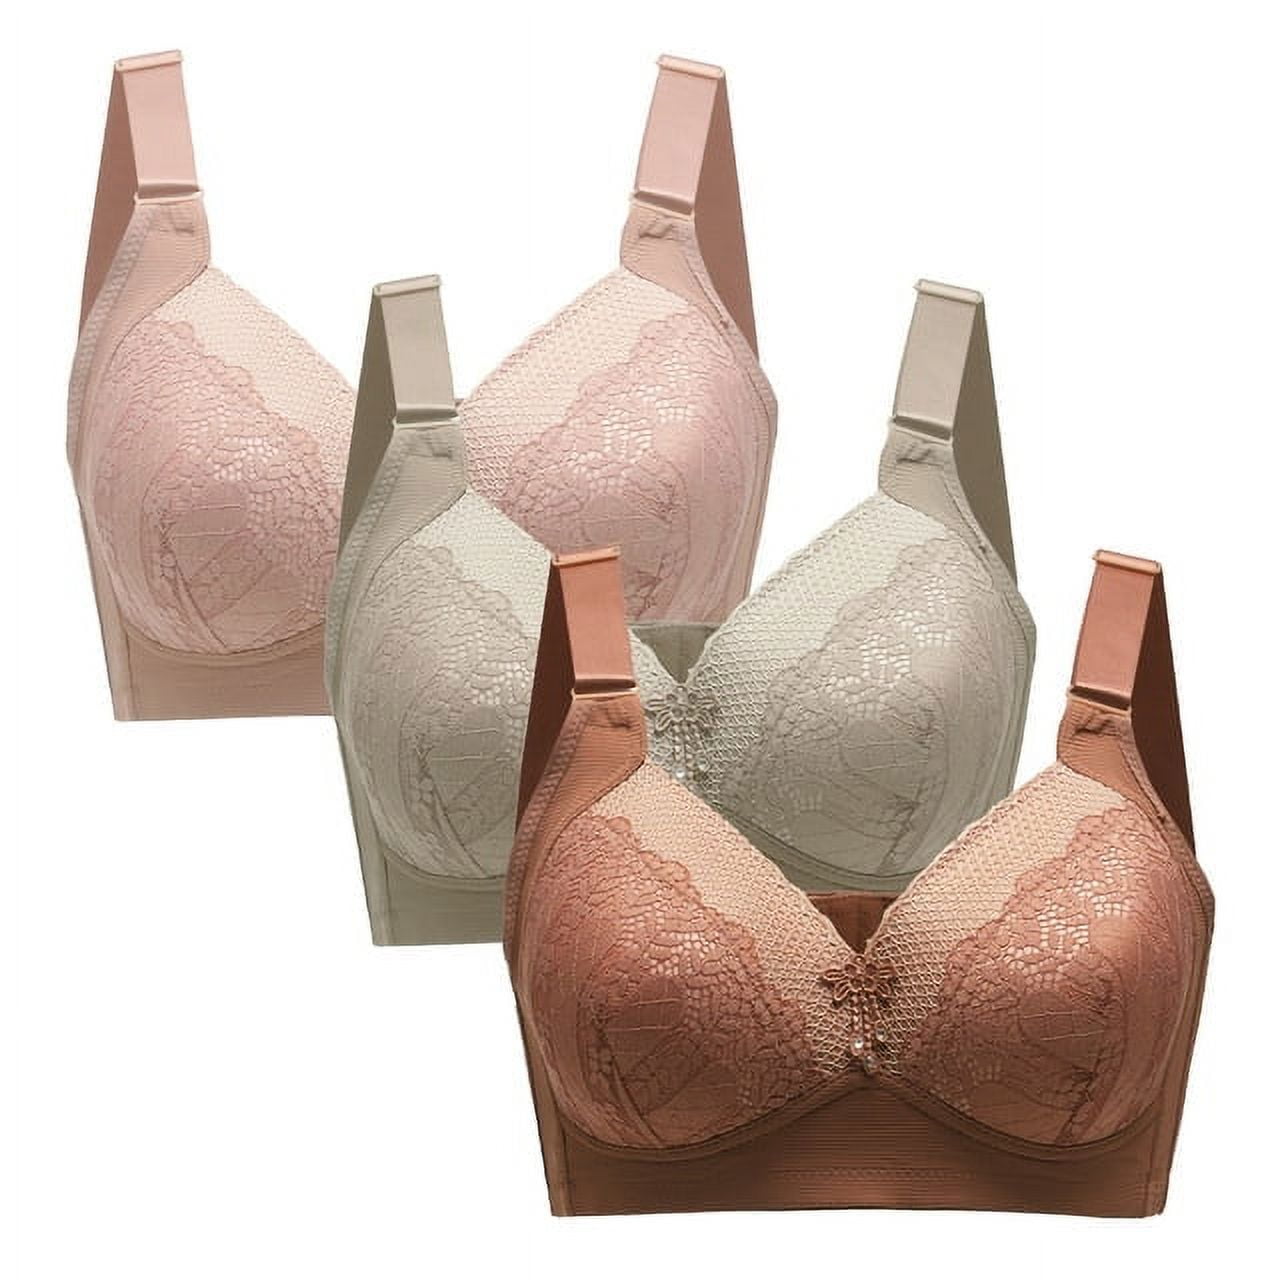 36B soft cup nonwire bra, Women's Fashion, Undergarments